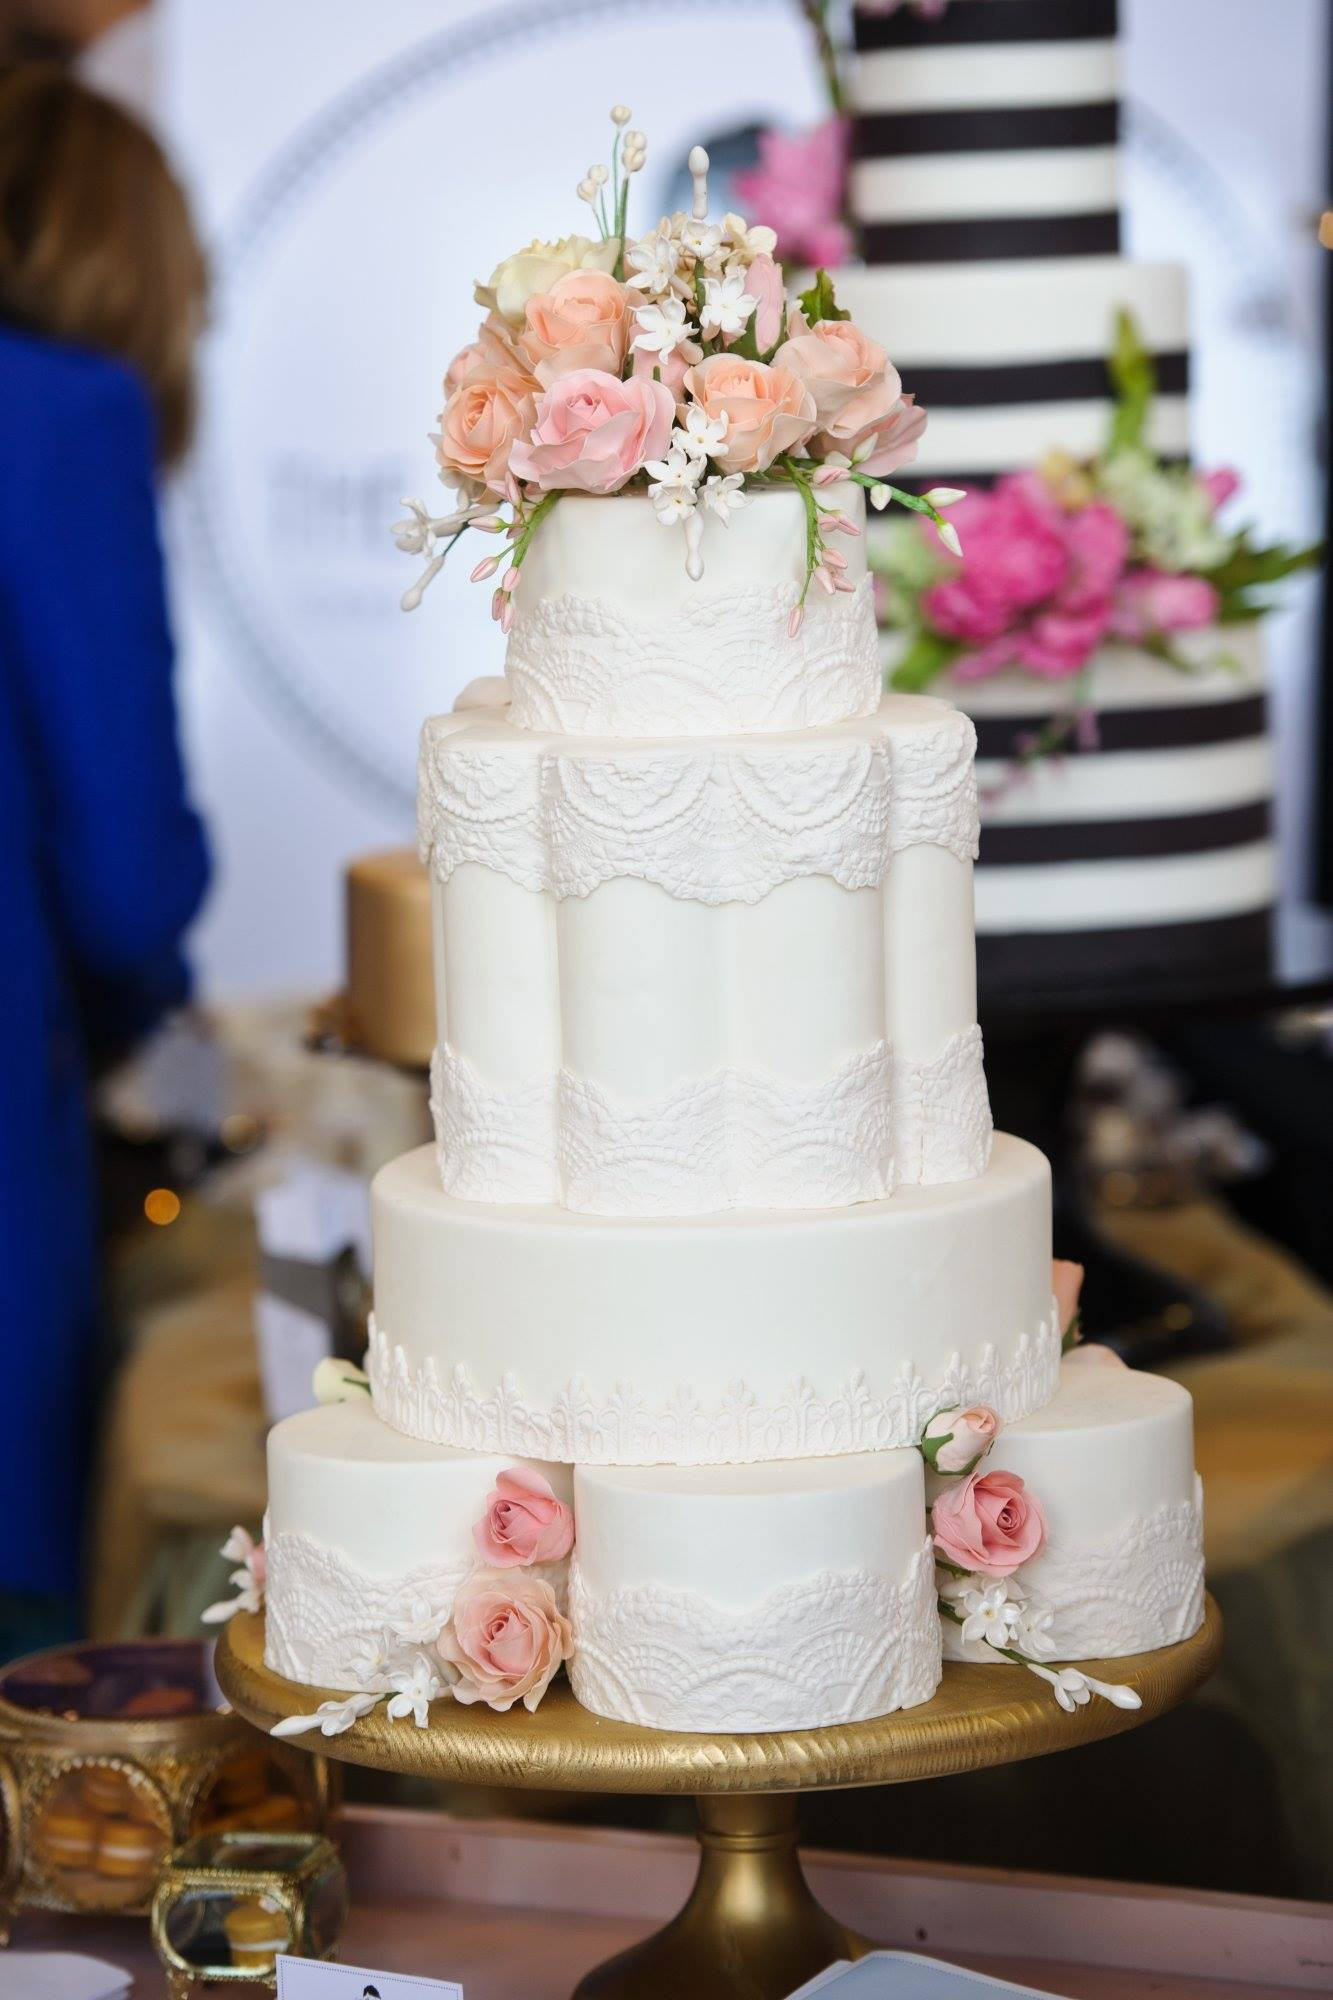 Elaborate Wedding Cakes
 40 Wedding Cake Designs with Elaborate Fondant Flowers